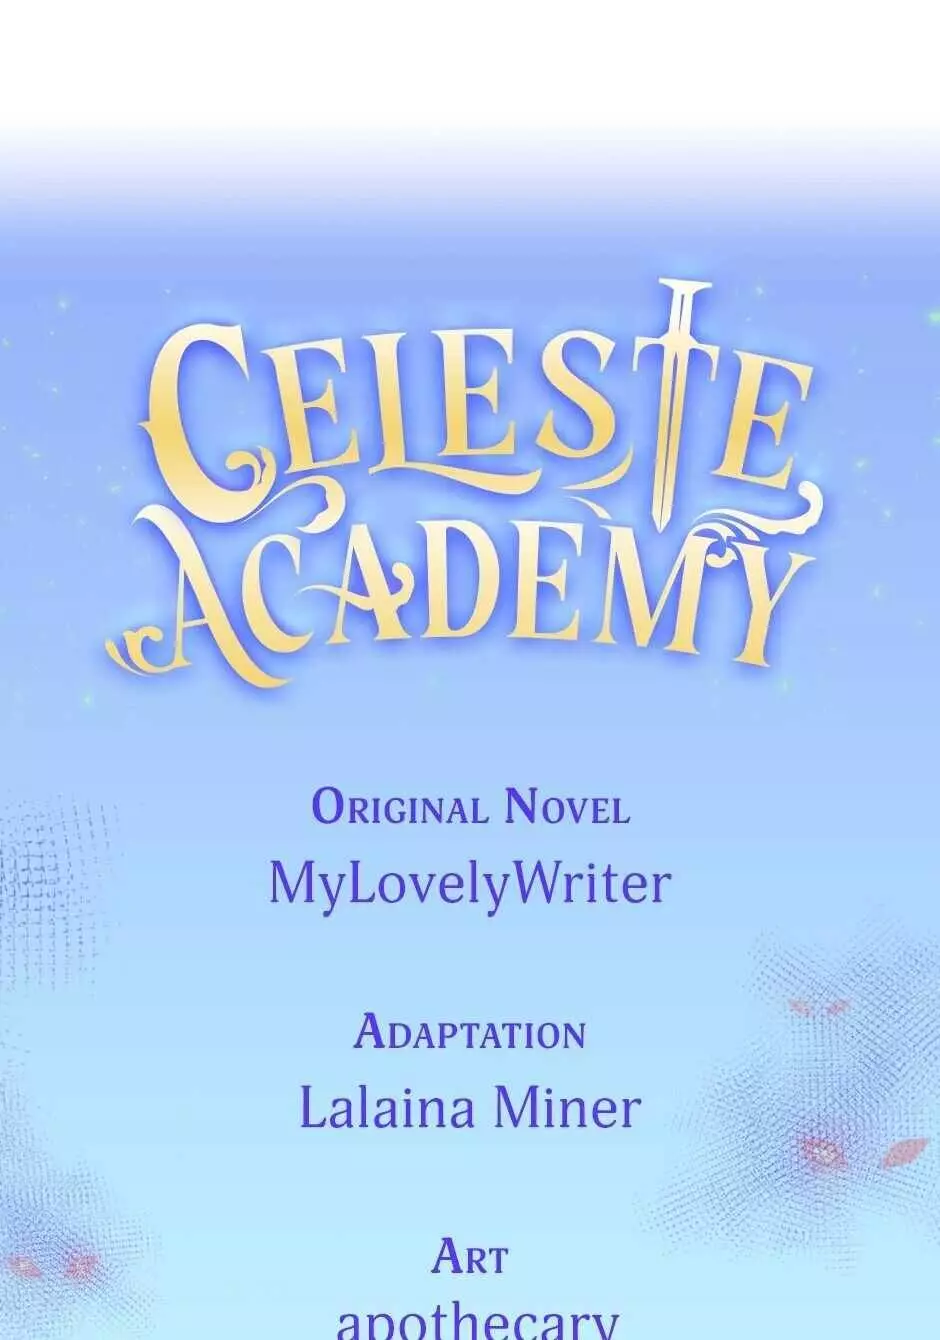 Celeste Academy - 10 page 62-ba418a0a